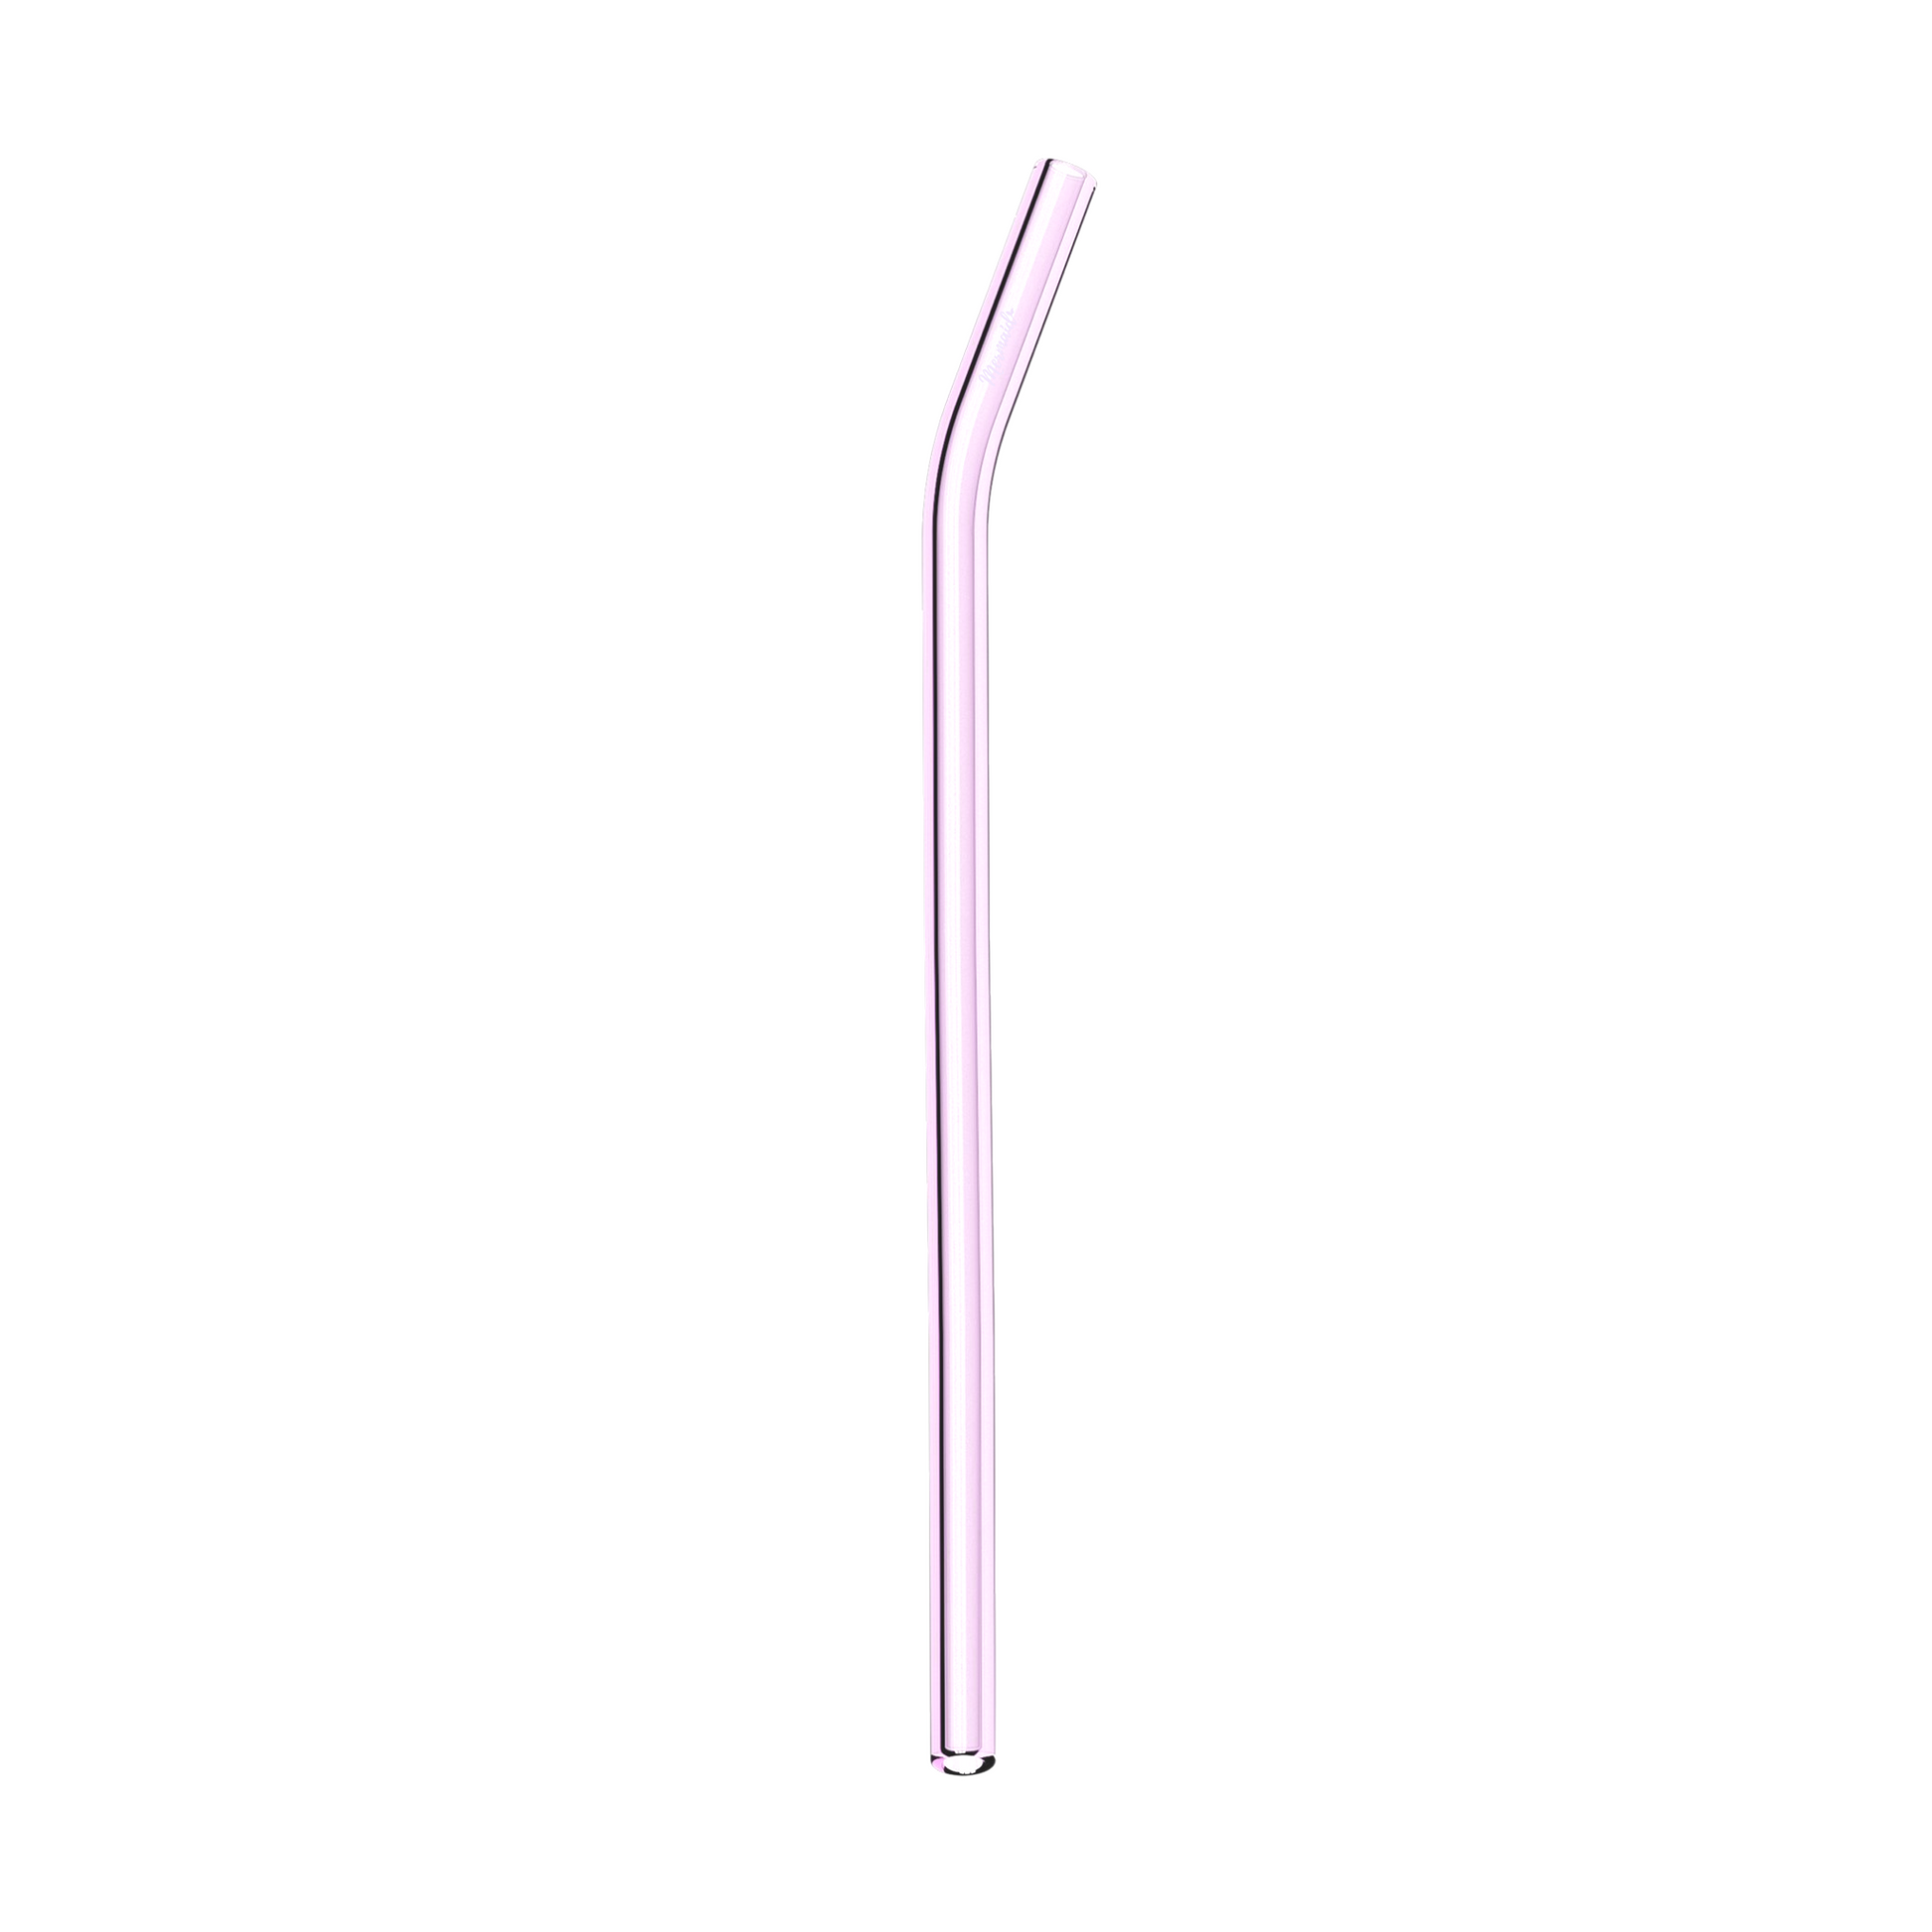 Glass Straws, Mermaid Straw, Reusable Straw, pink glass curved single